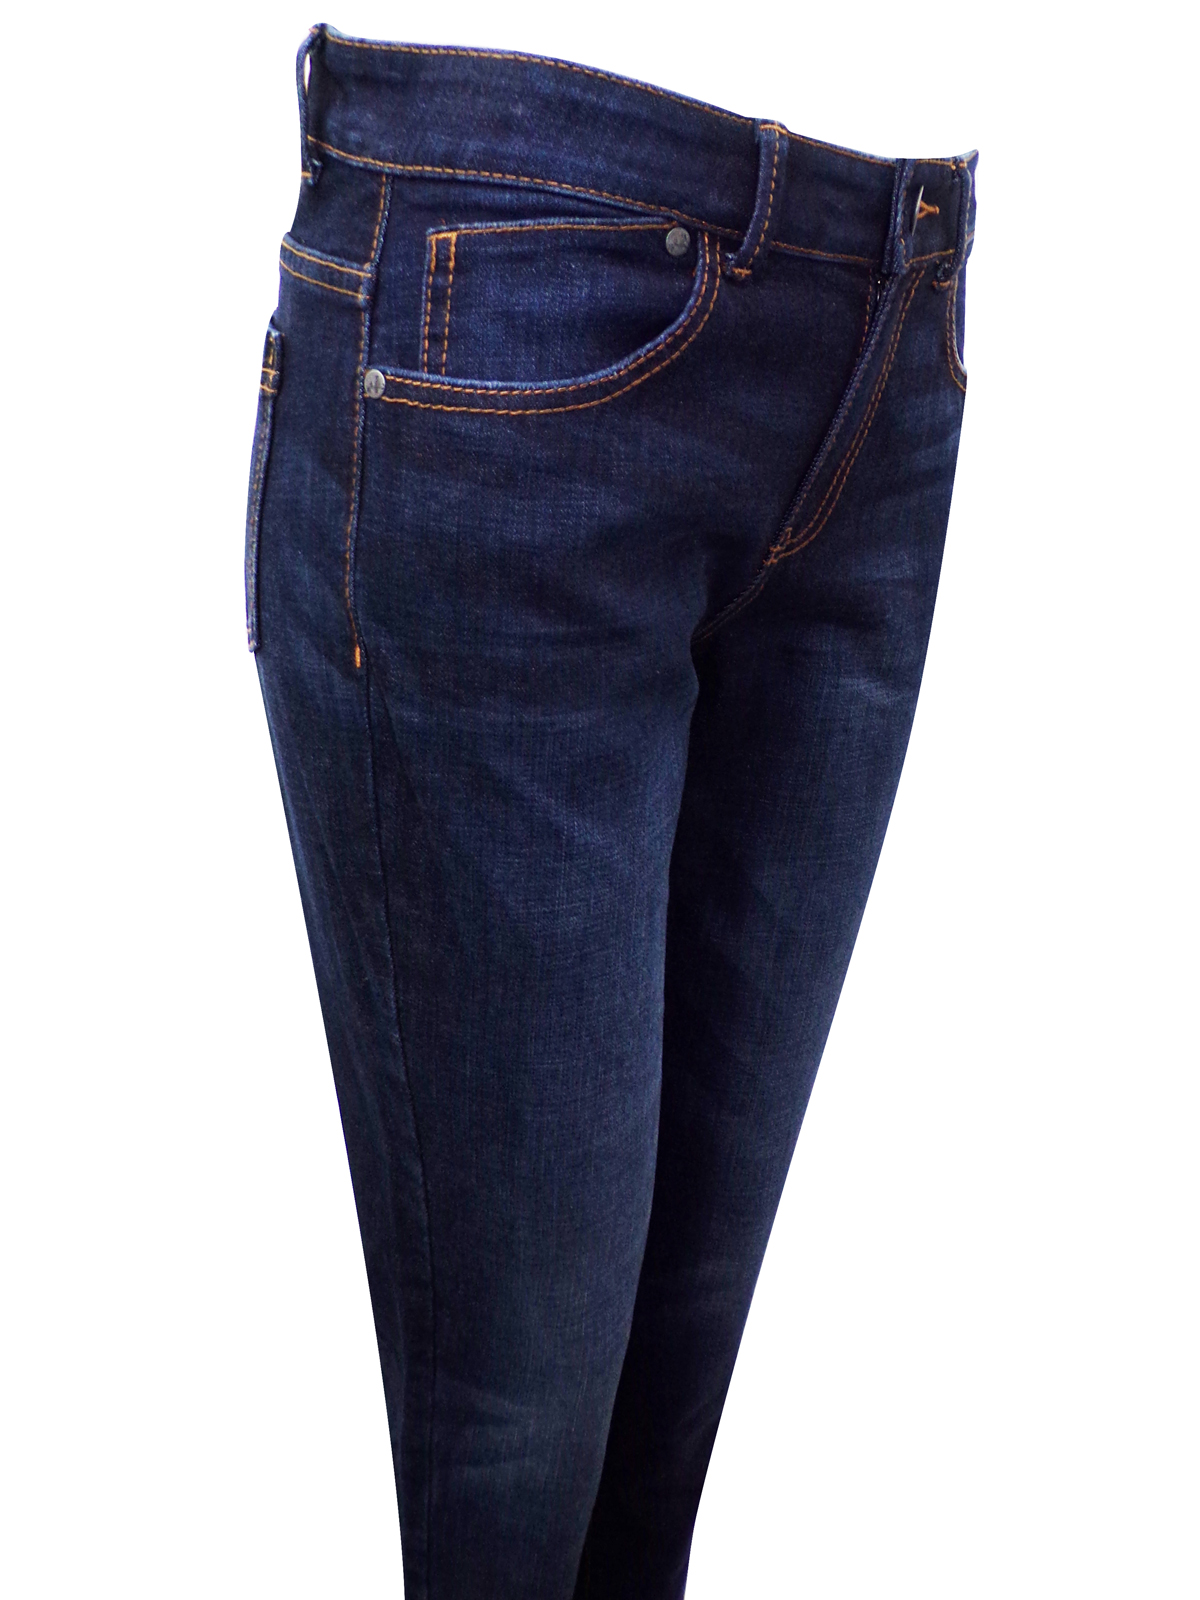 Marks and Spencer - - M&5 INDIGO Straight Leg Denim Jeans - Size 6 to 20